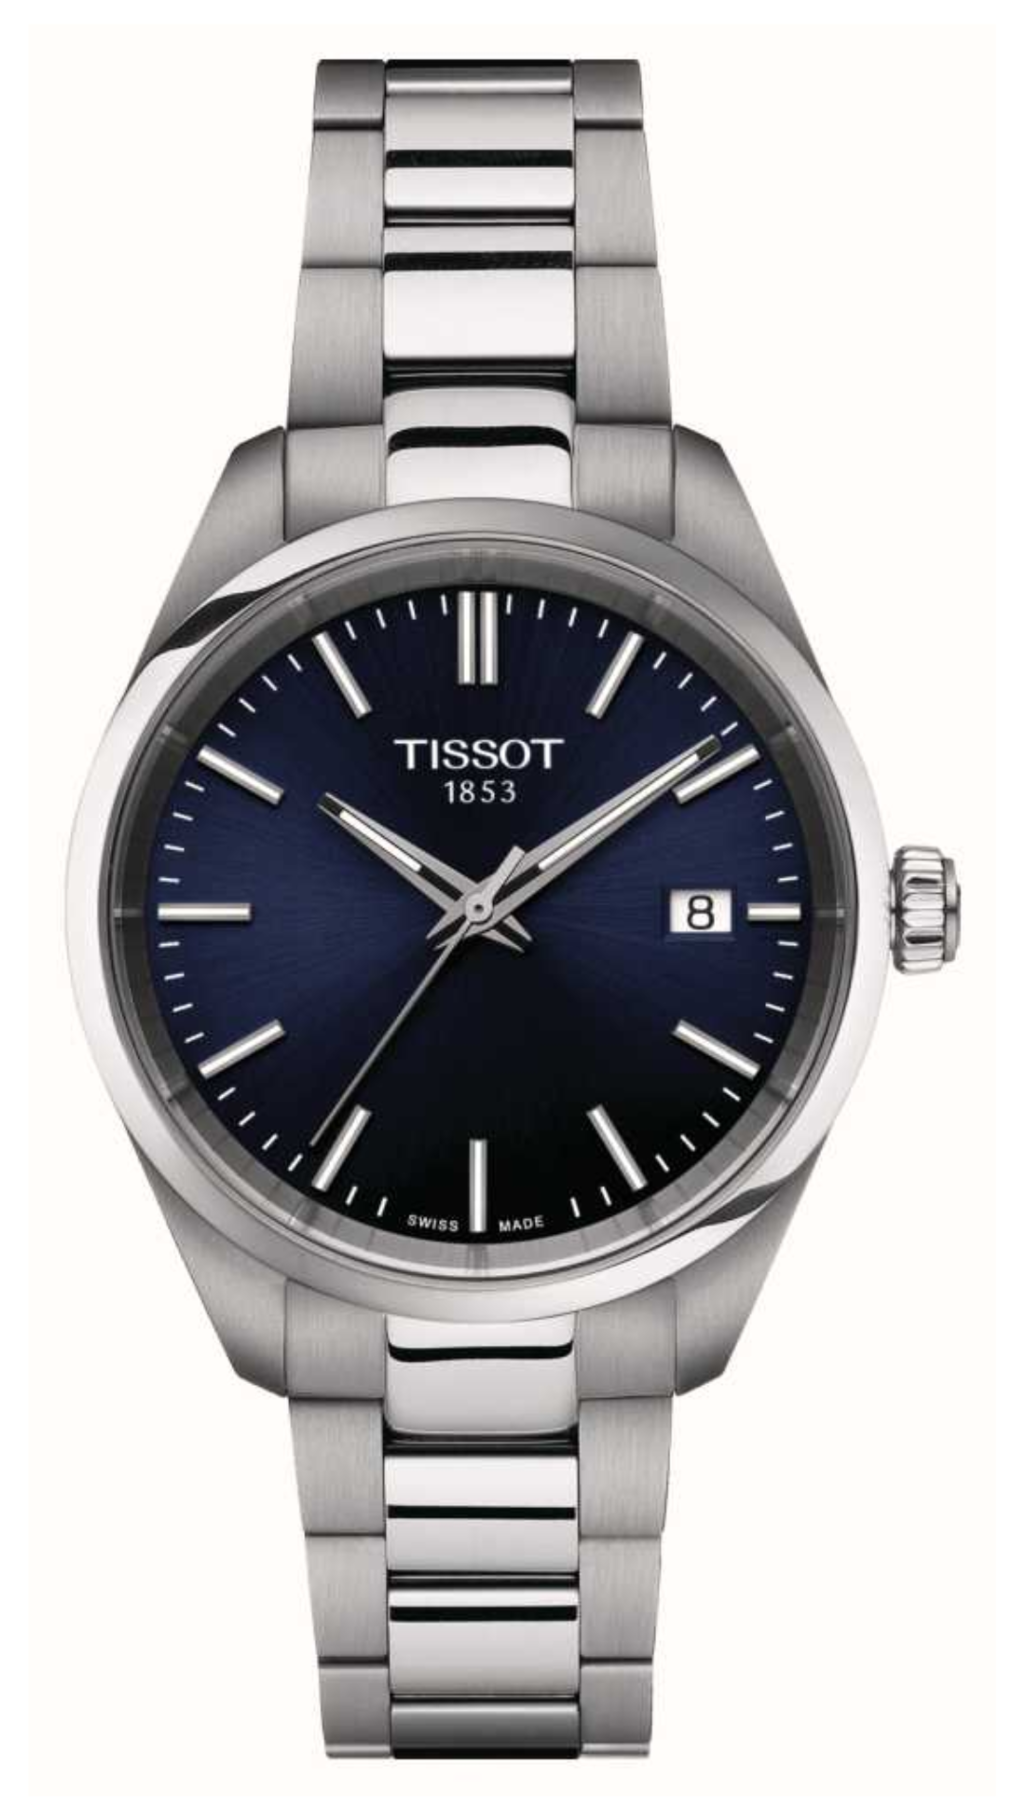 Reloj Tissot Hombre Gentleman T127.410.11.041.00